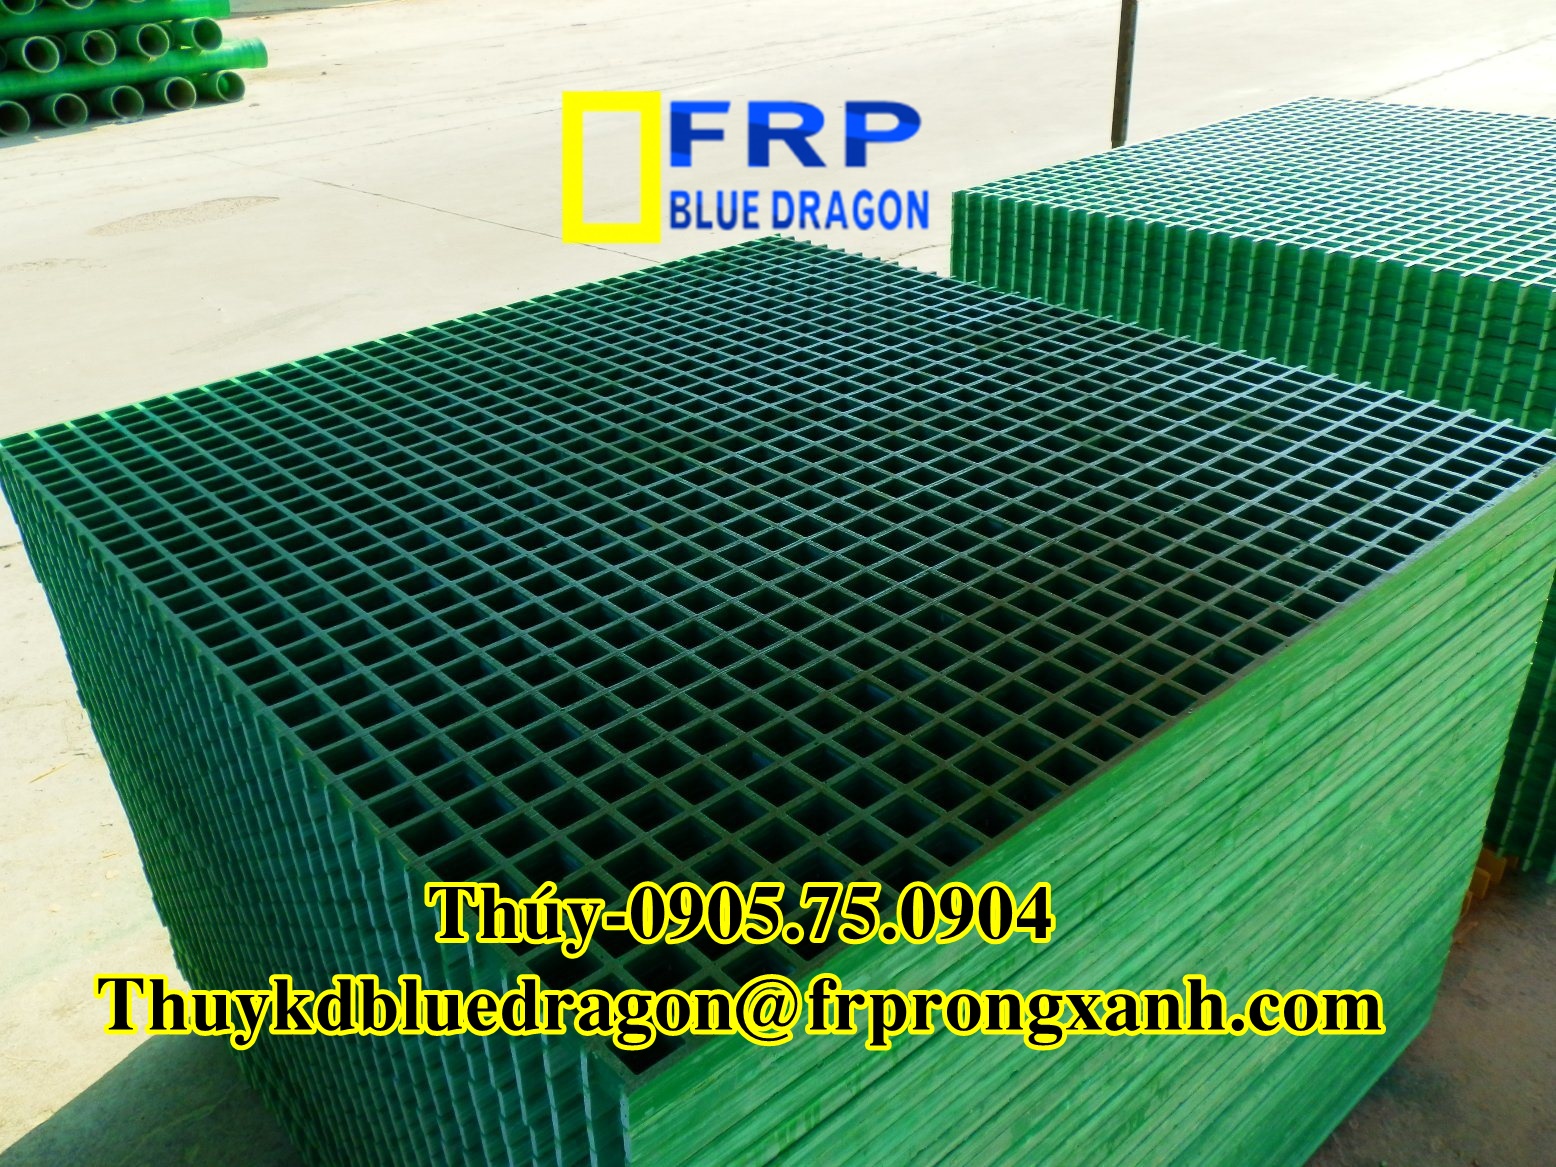 China-Construction-FRP-Grating-Manufacturer-Size-38-38-38mm-1220-3660mm.jpg